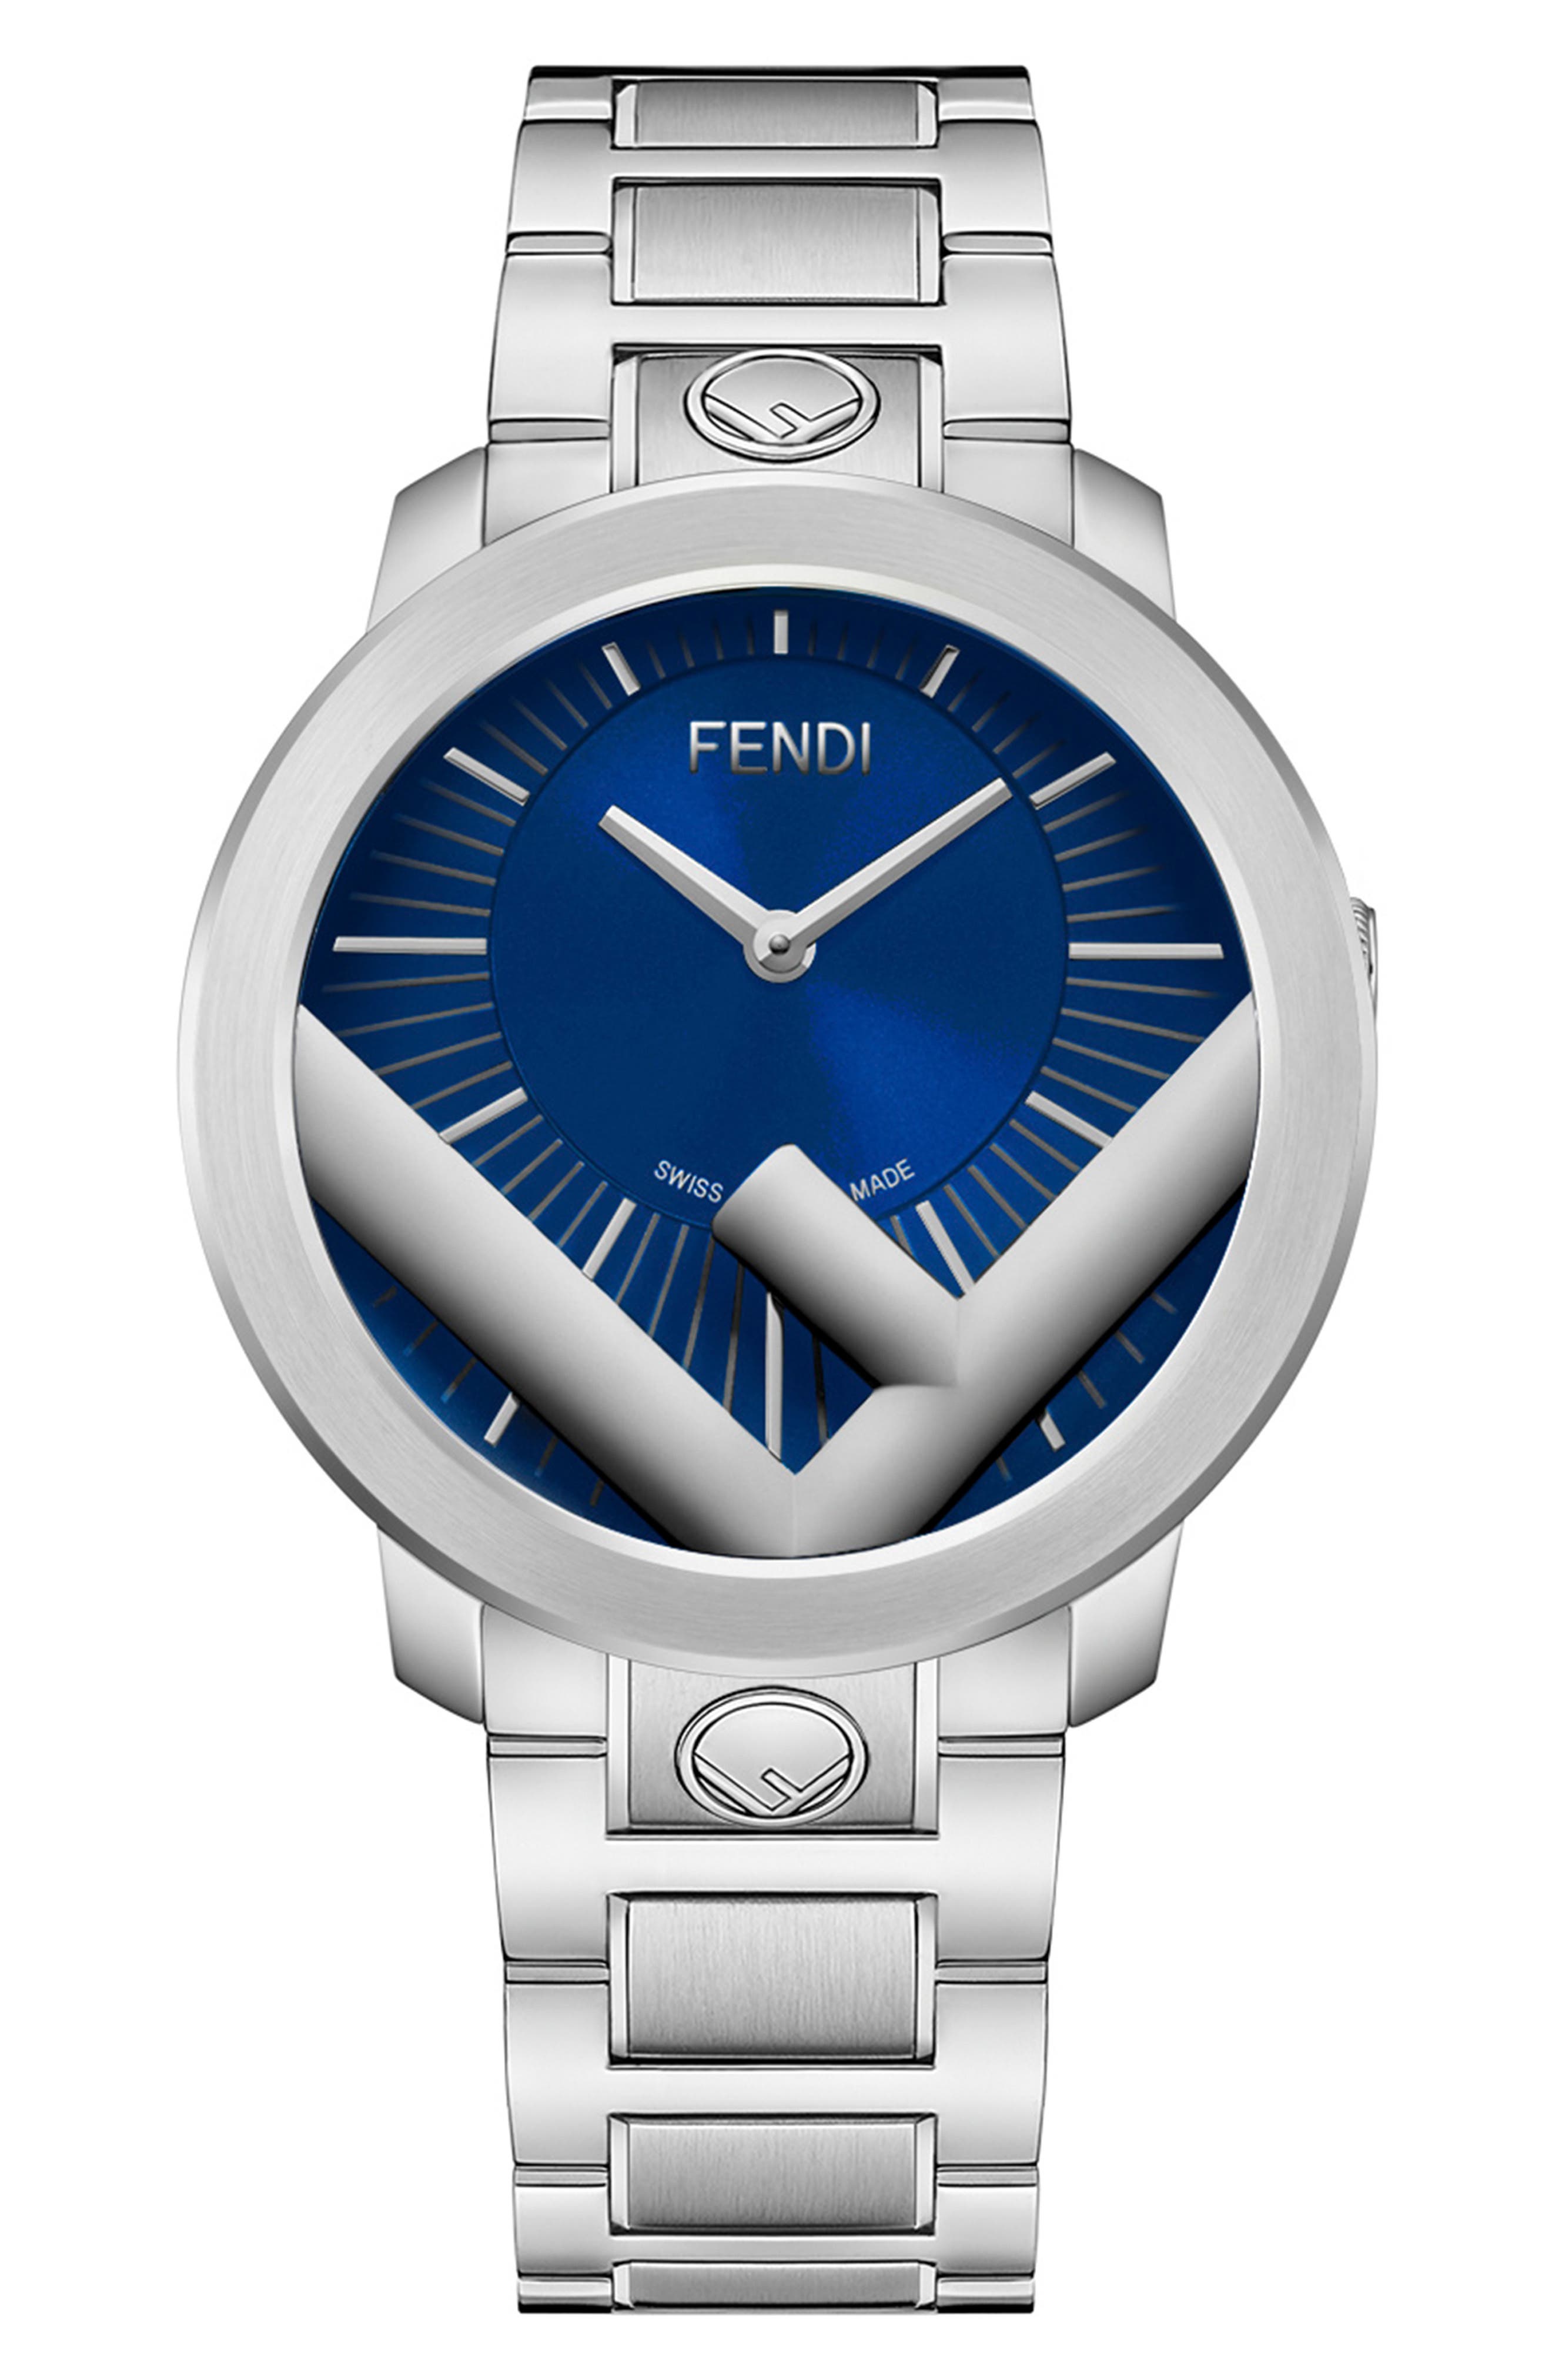 fendi men's watches prices